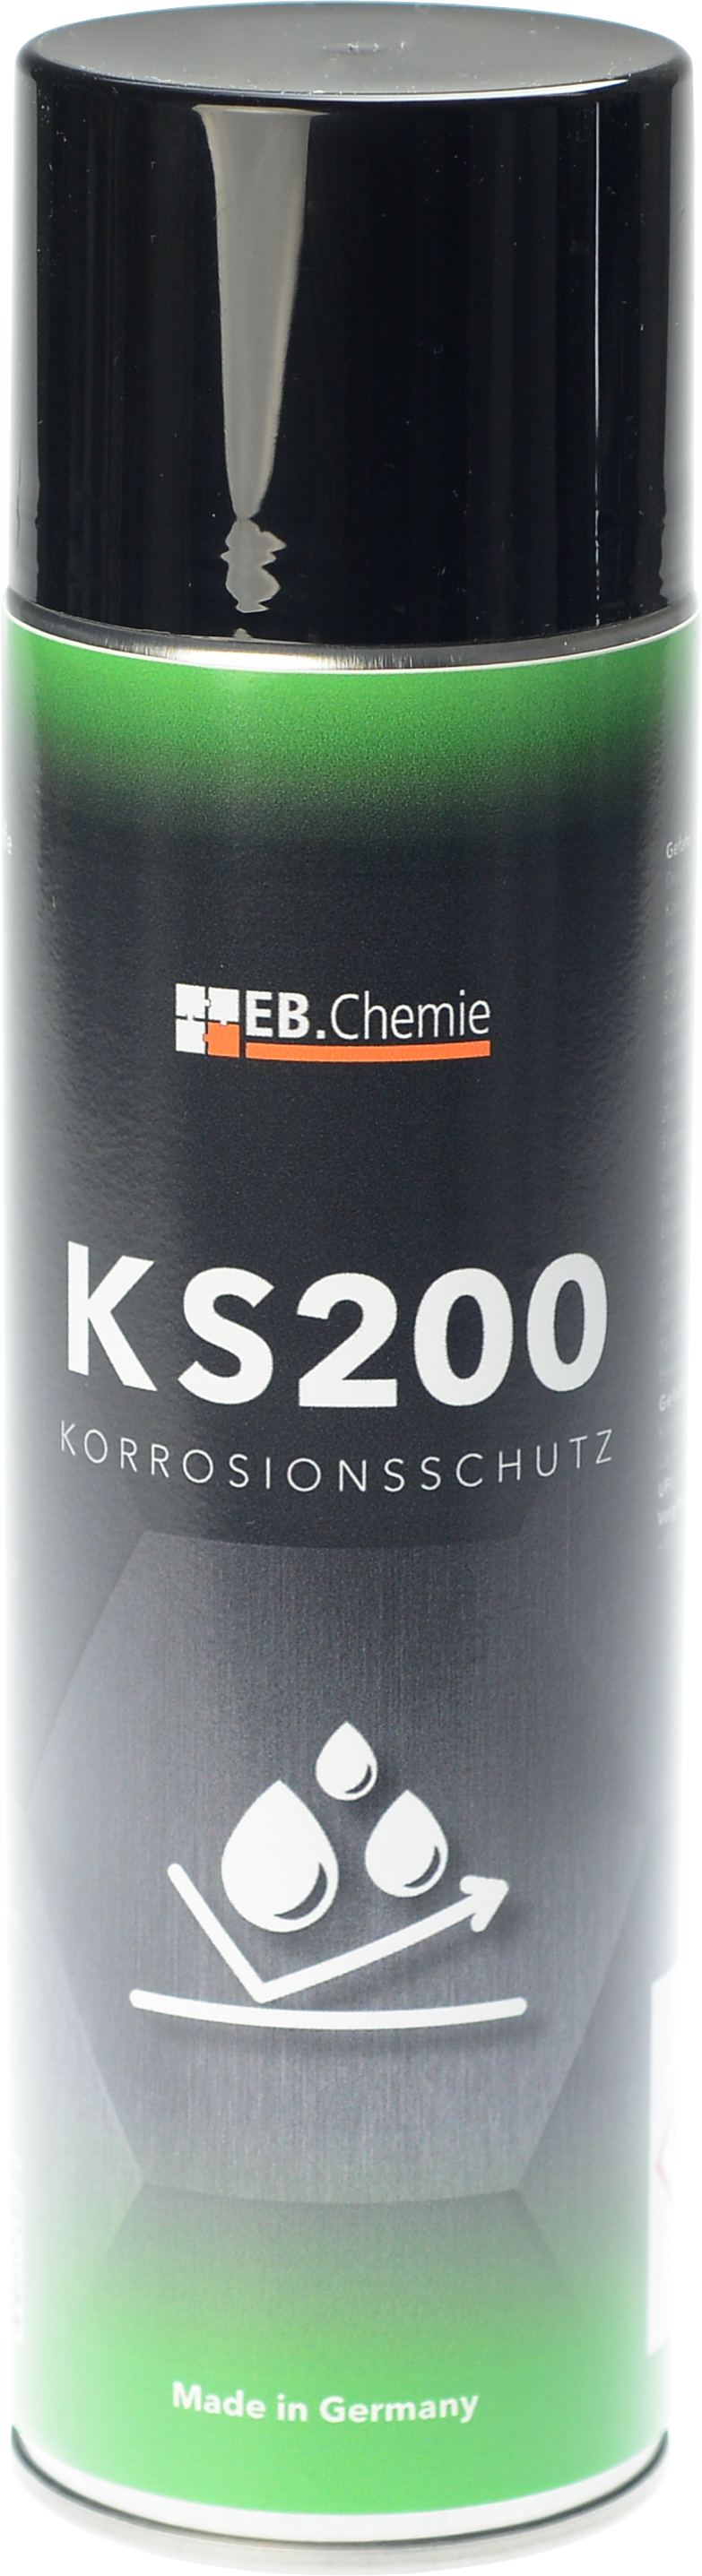 KS200 - Korrosionsschutz